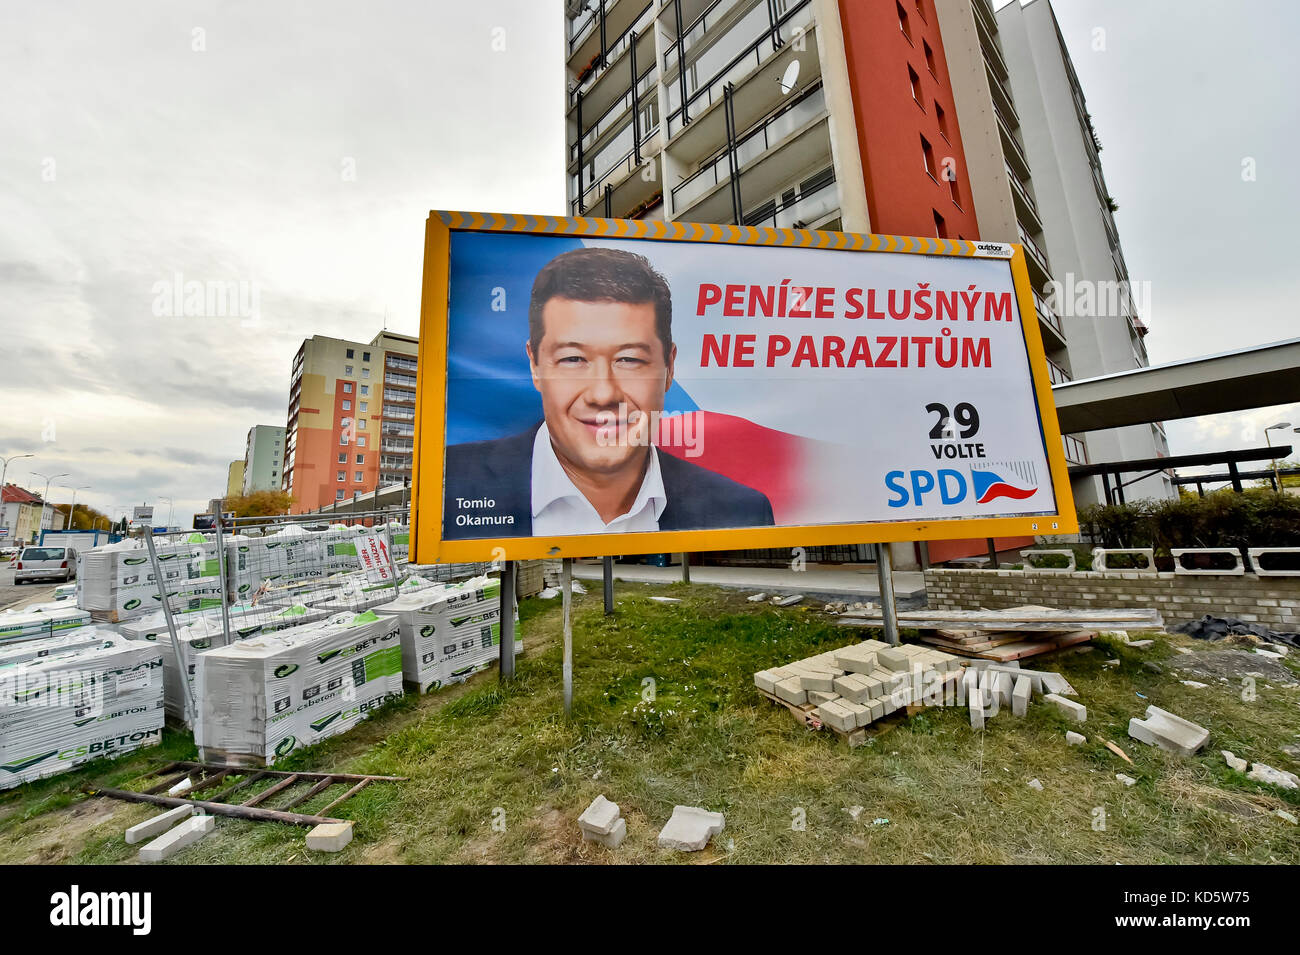 Billboard of SPD (Freedom and Direct Democracy), Tomio Okamura, Kladno, Czech Republic, October 4, 2017. Stock Photo